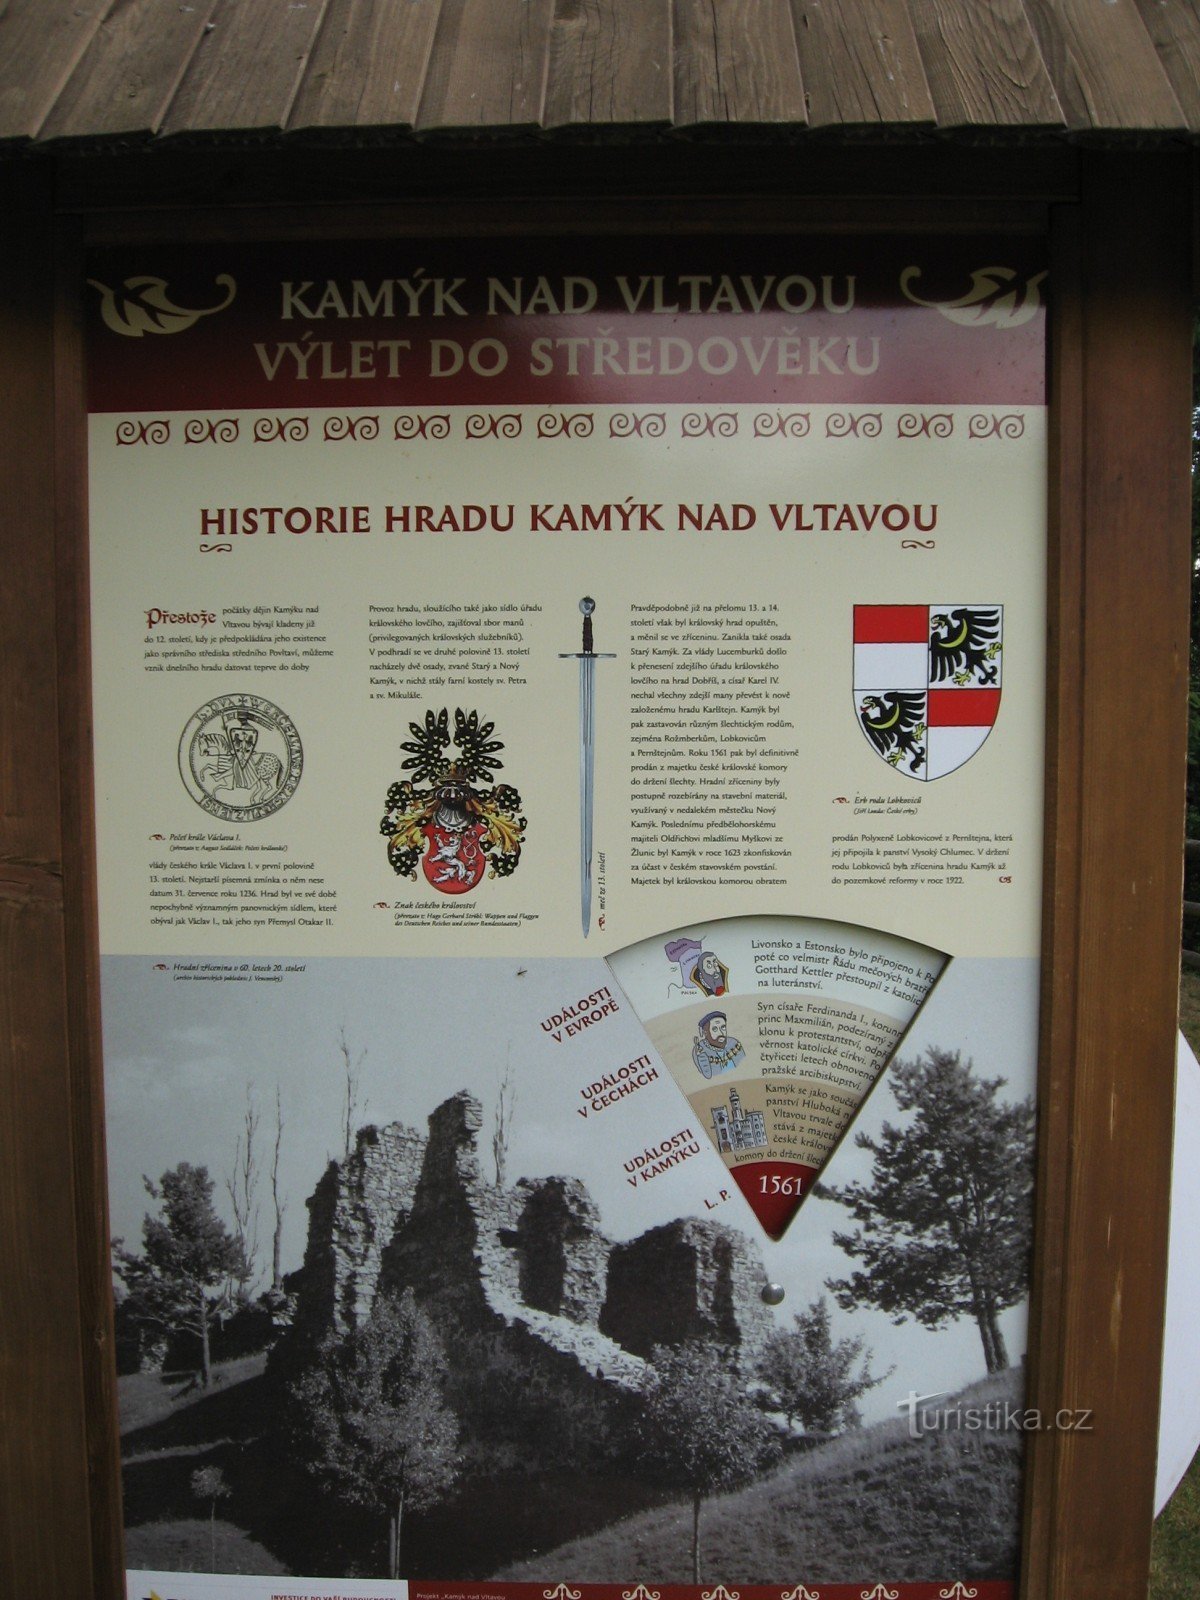 information panel in the grounds of the Kamýk nad Vltavou ruins